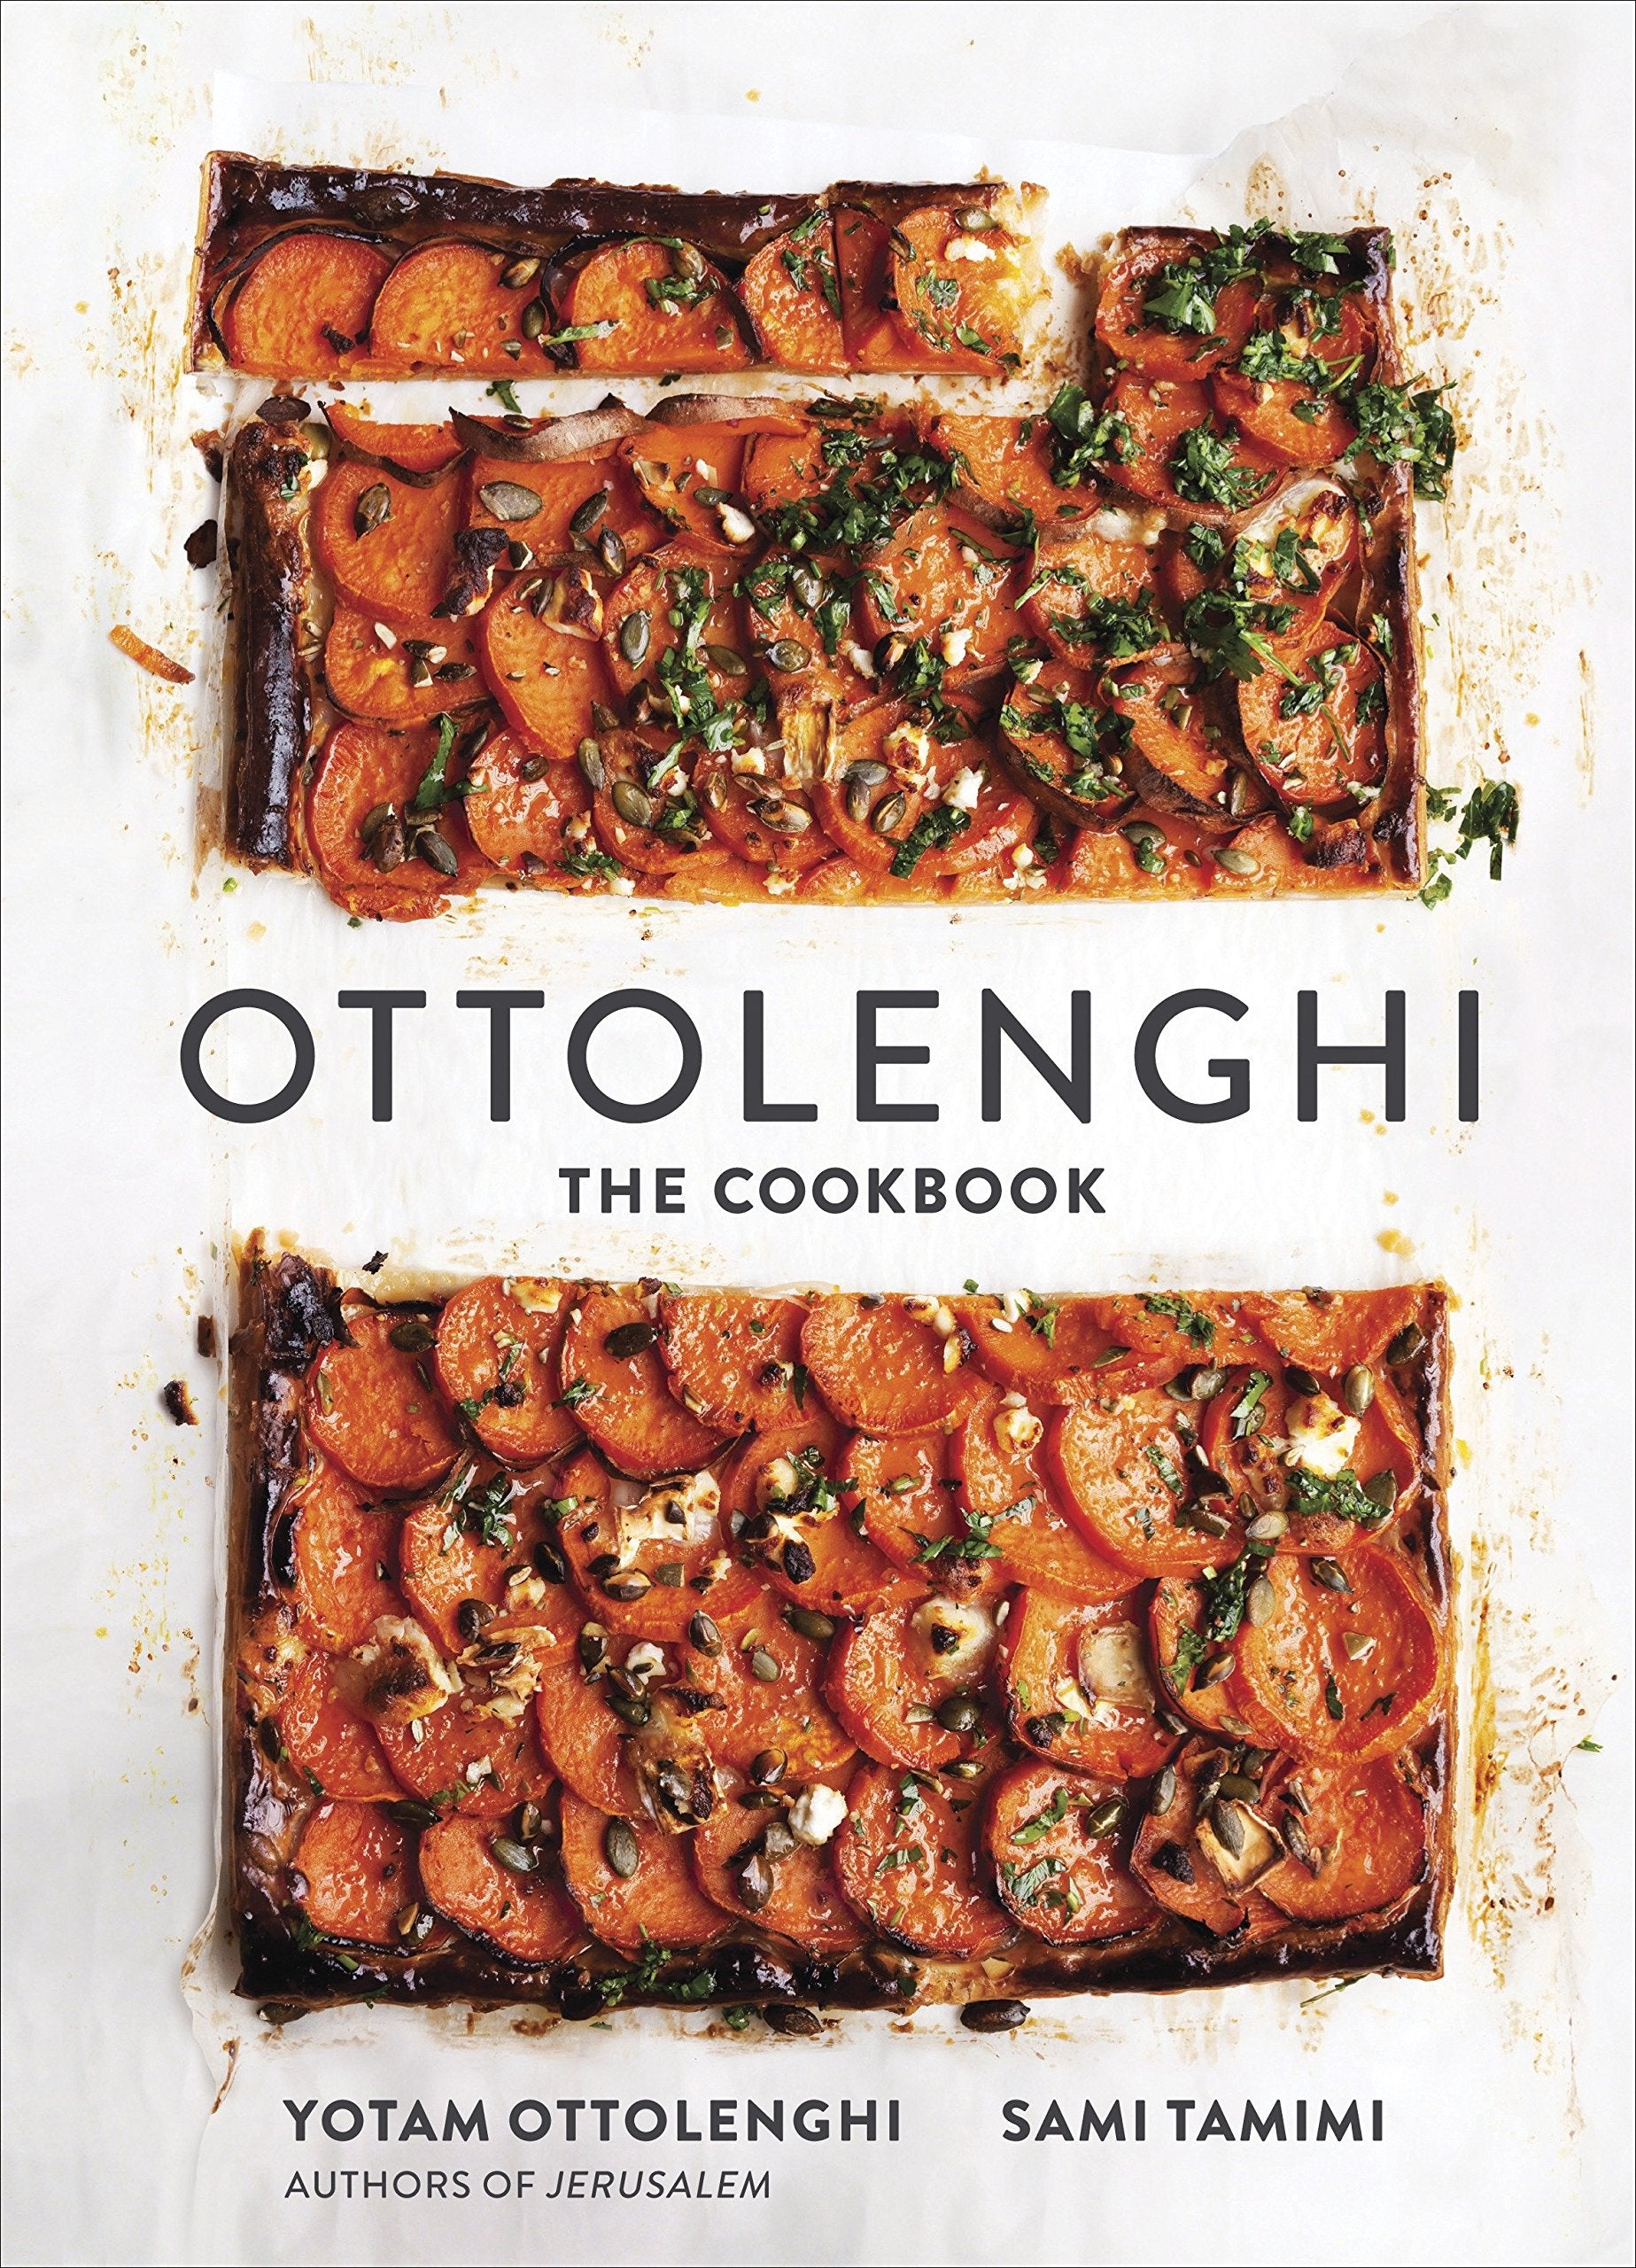 Ottolenghi: The Cookbook (Yotam Ottolenghi, Sami Tamimi) *Signed*